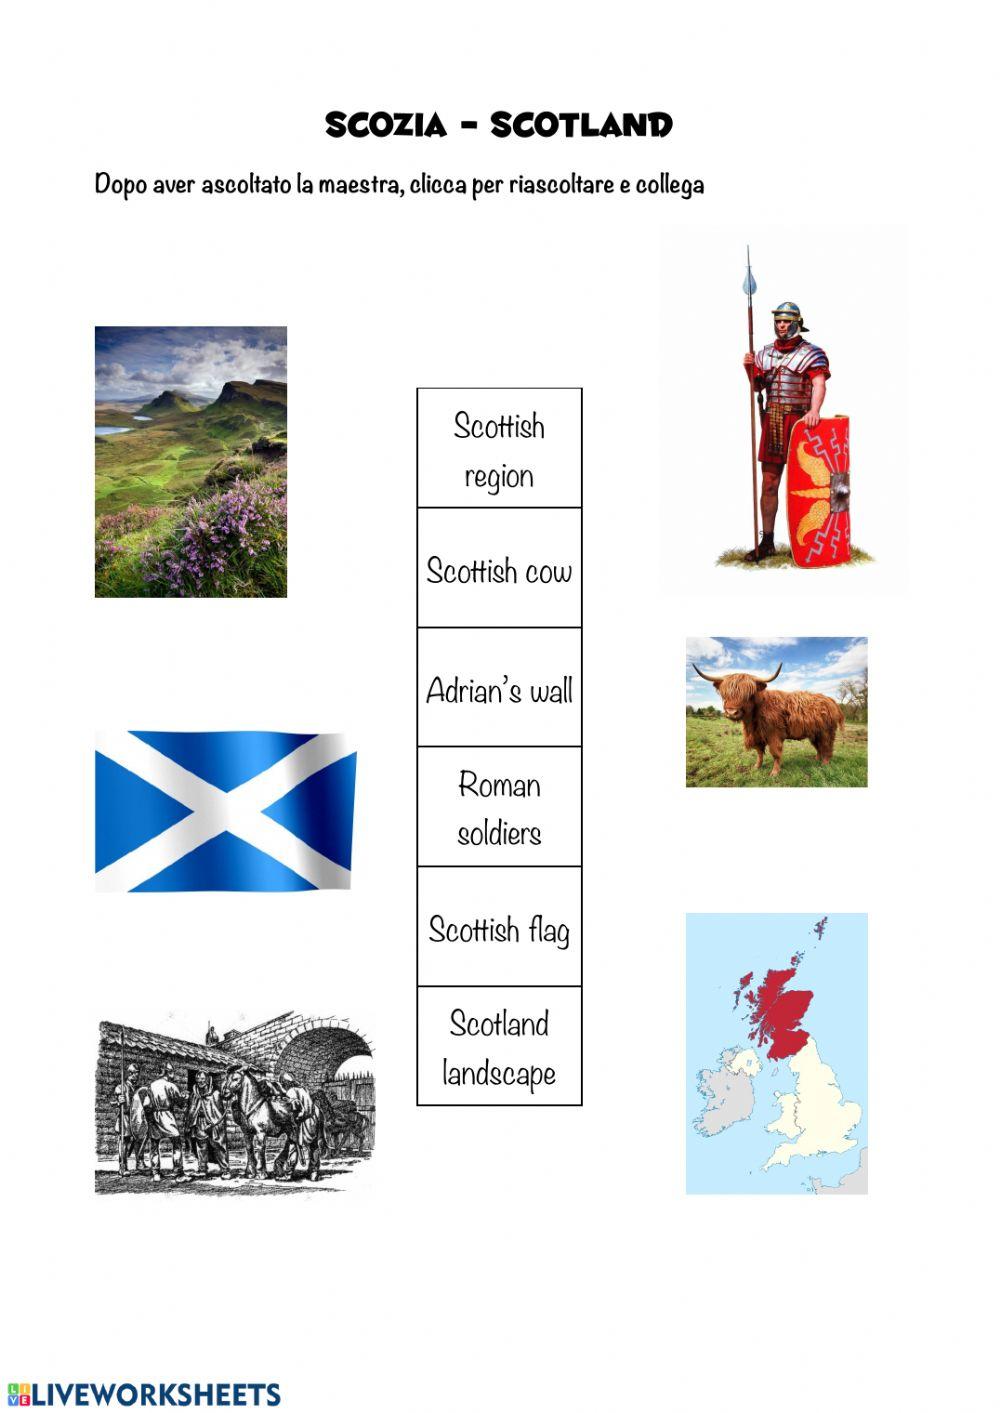 Scozia Scotland